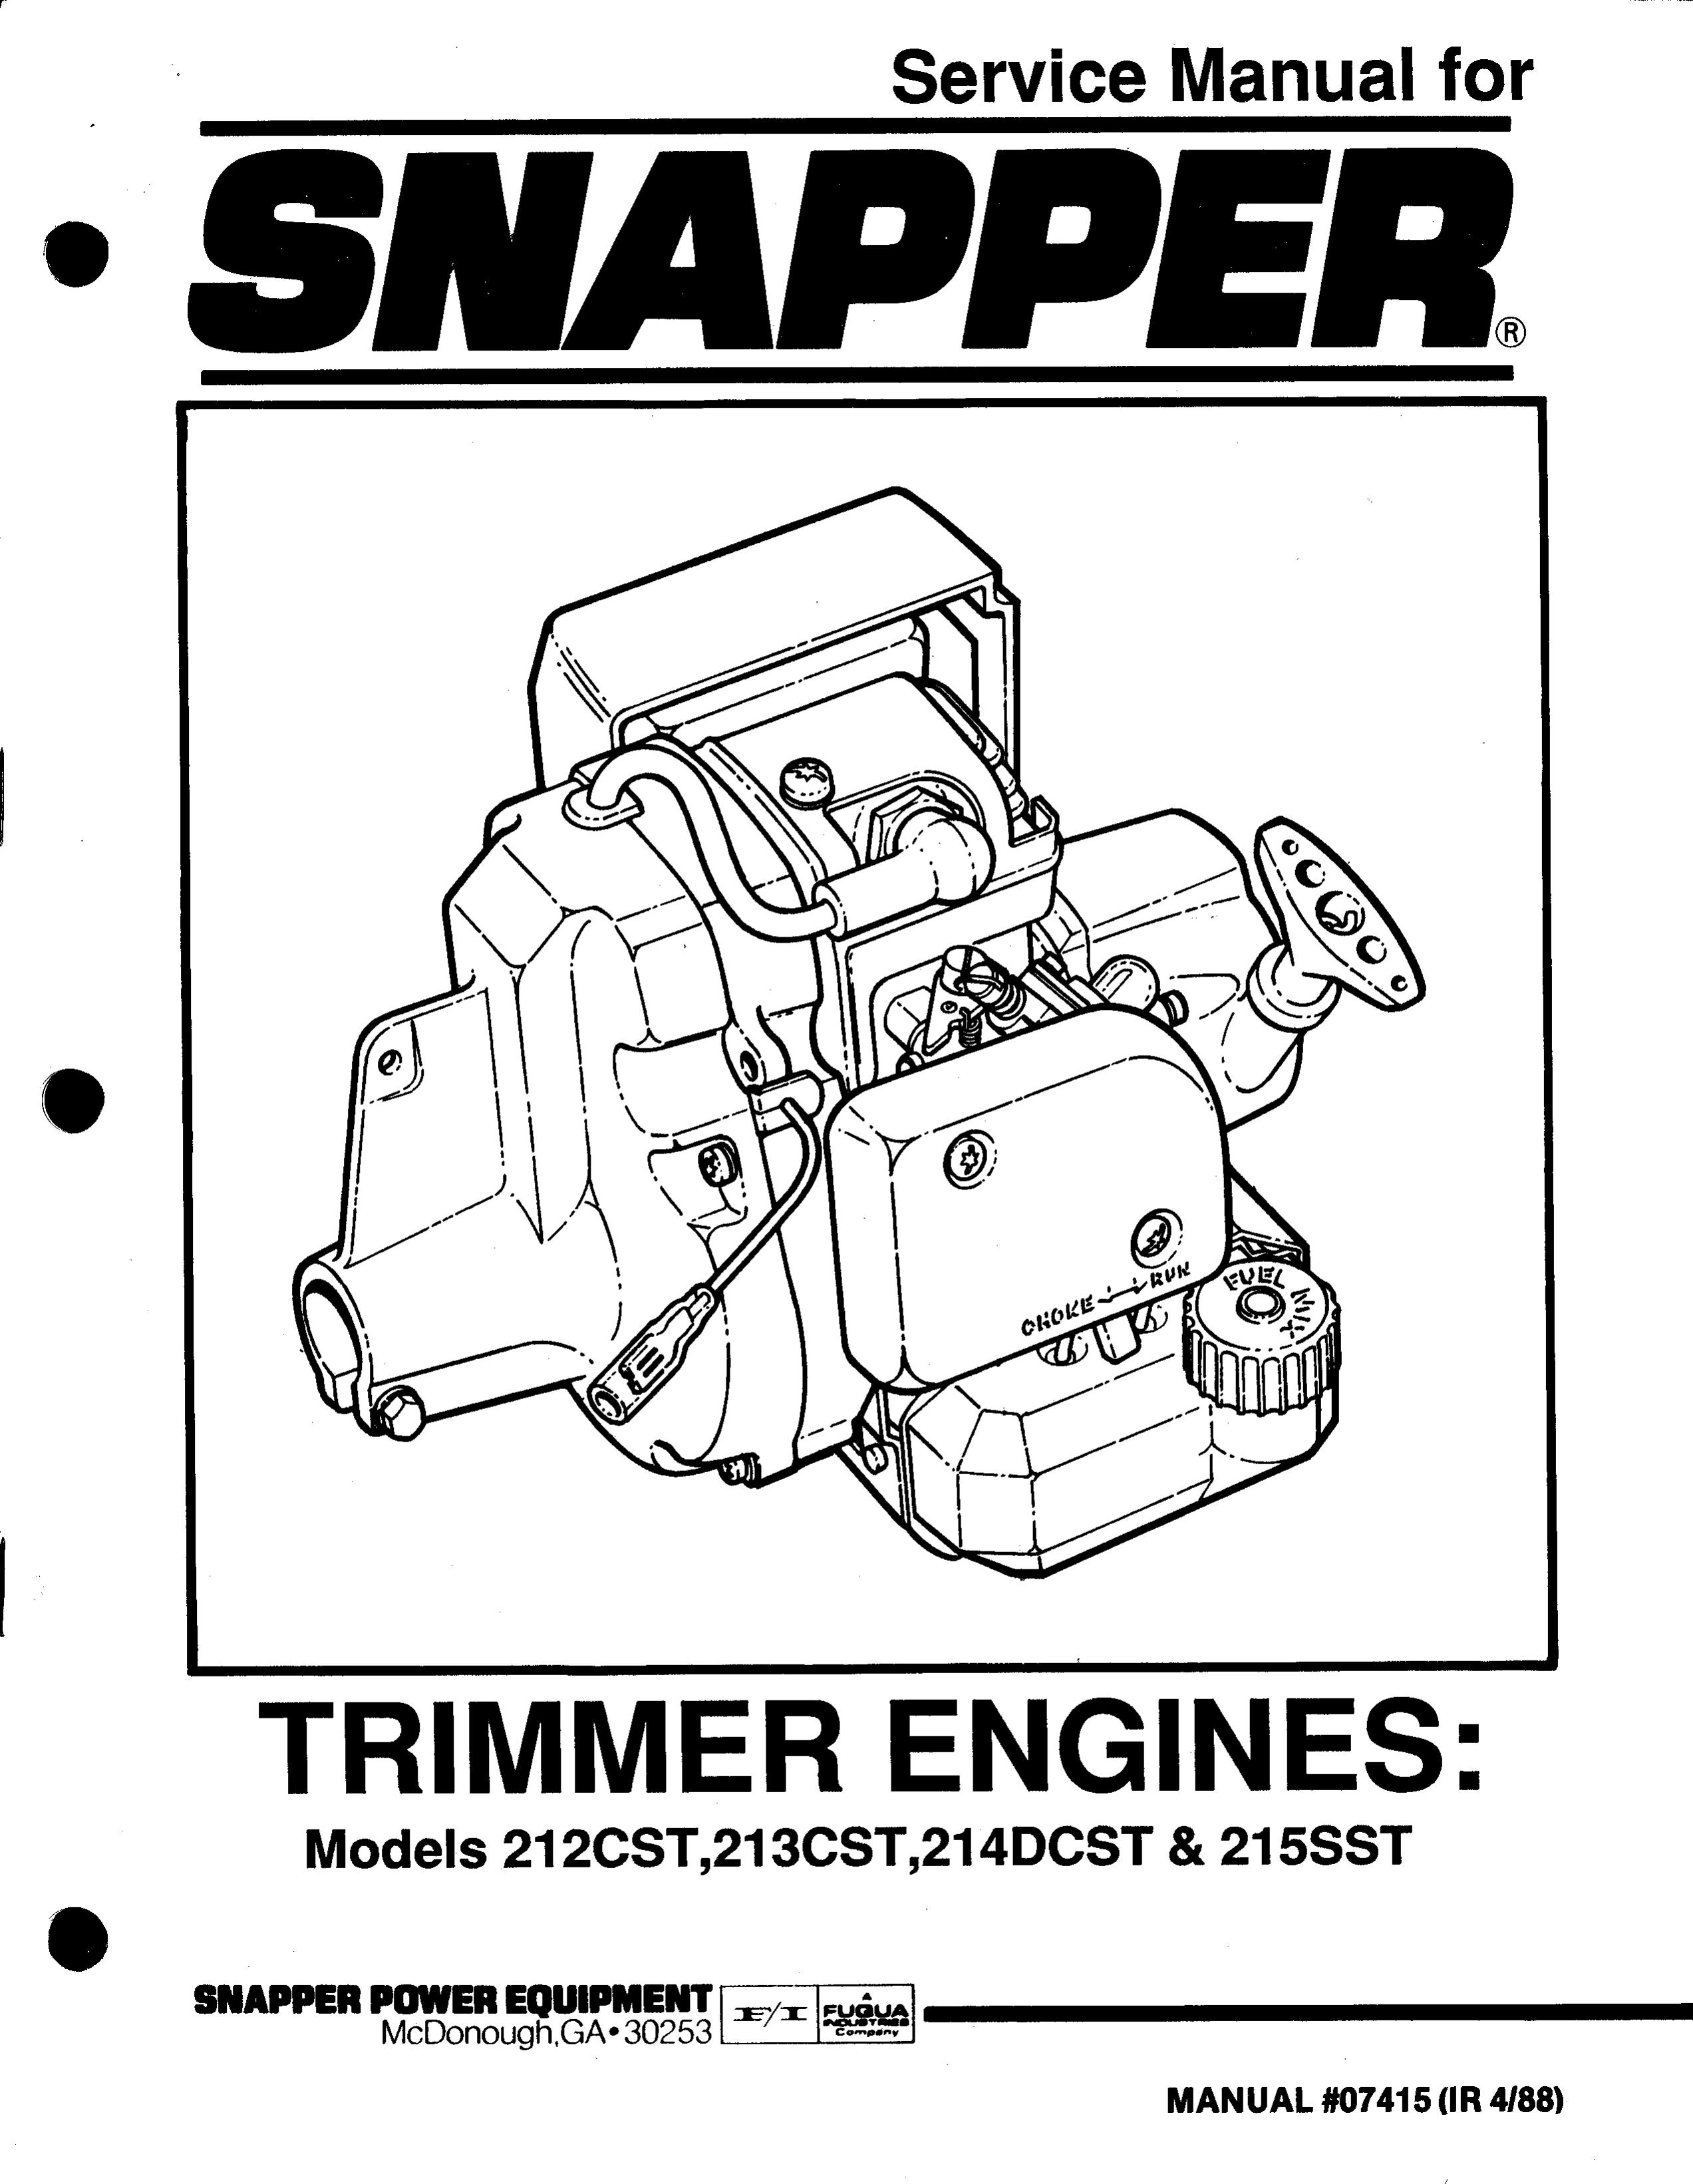 Snapper 214DCST Trimmer User Manual